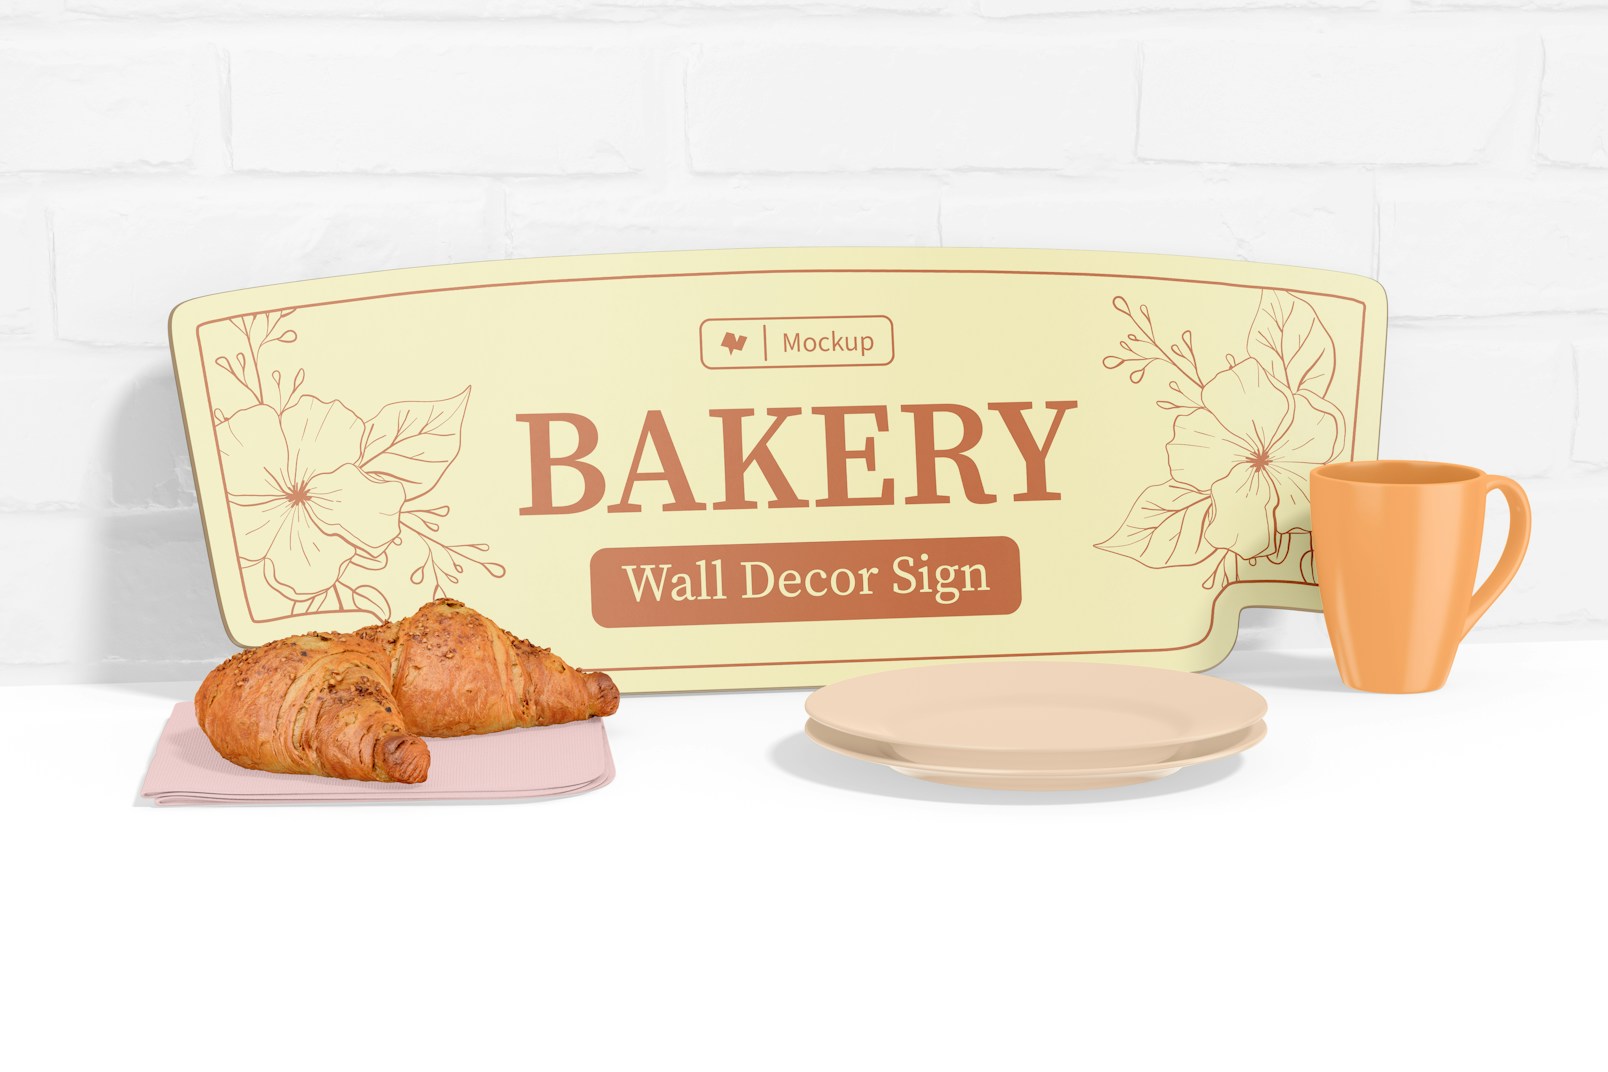 Bakery Wall Decor Sign Mockup, Hung on Wall